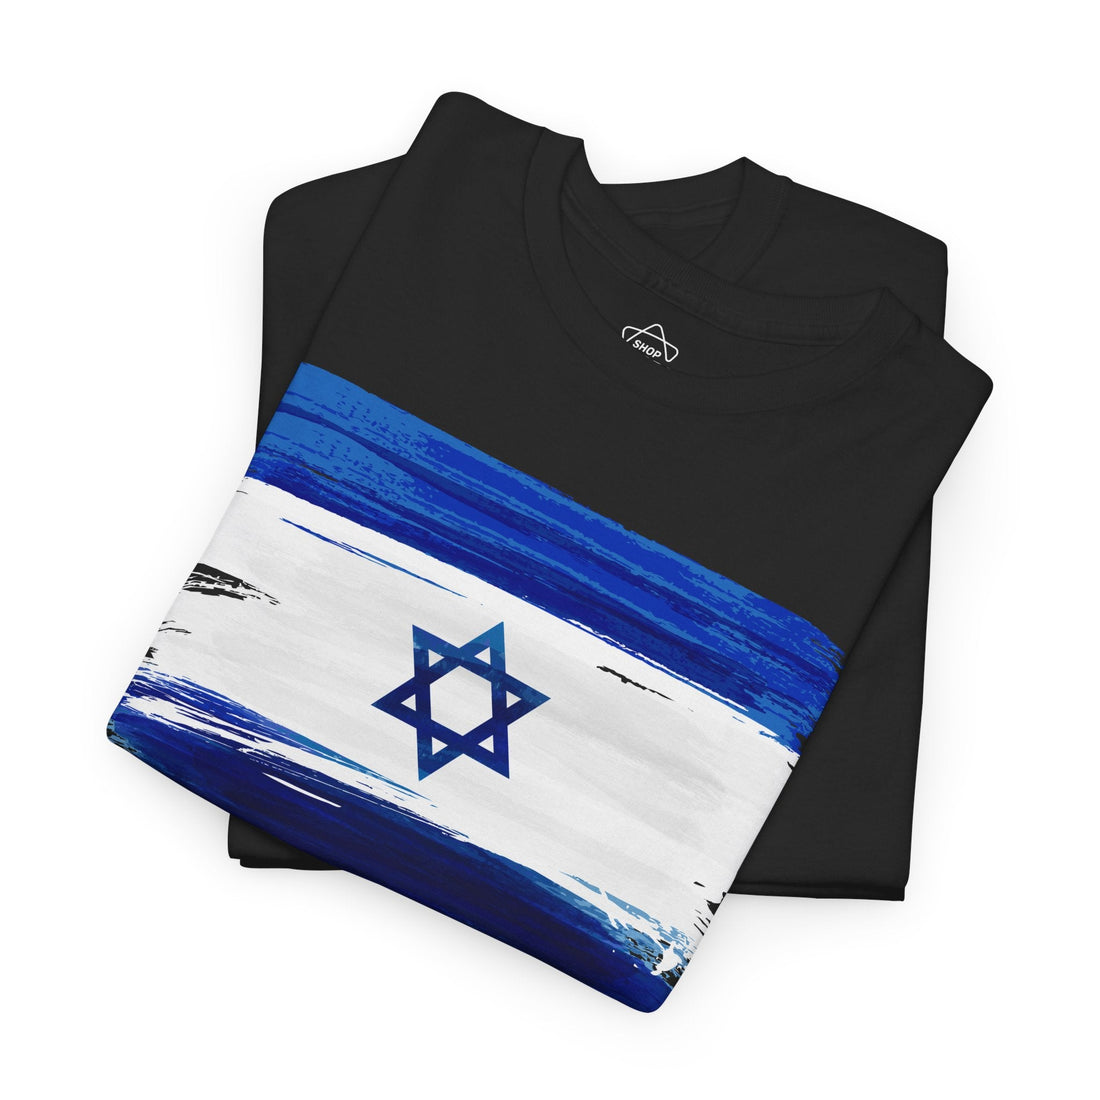 Israeli Flag T-Shirt - Shop Israel